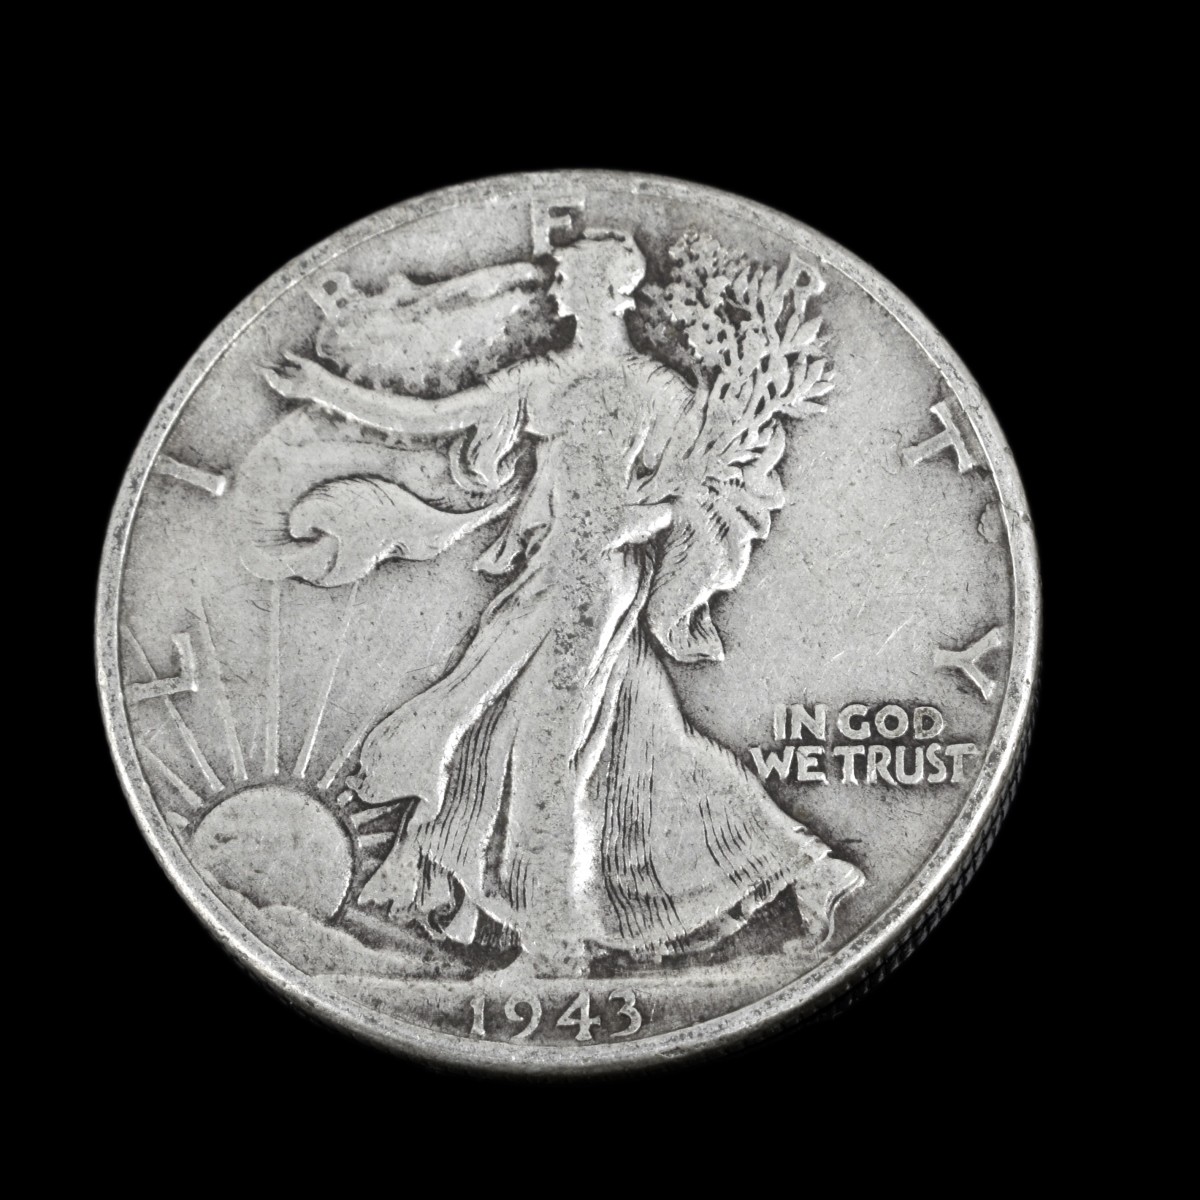 Twenty U.S. Silver Half Dollars